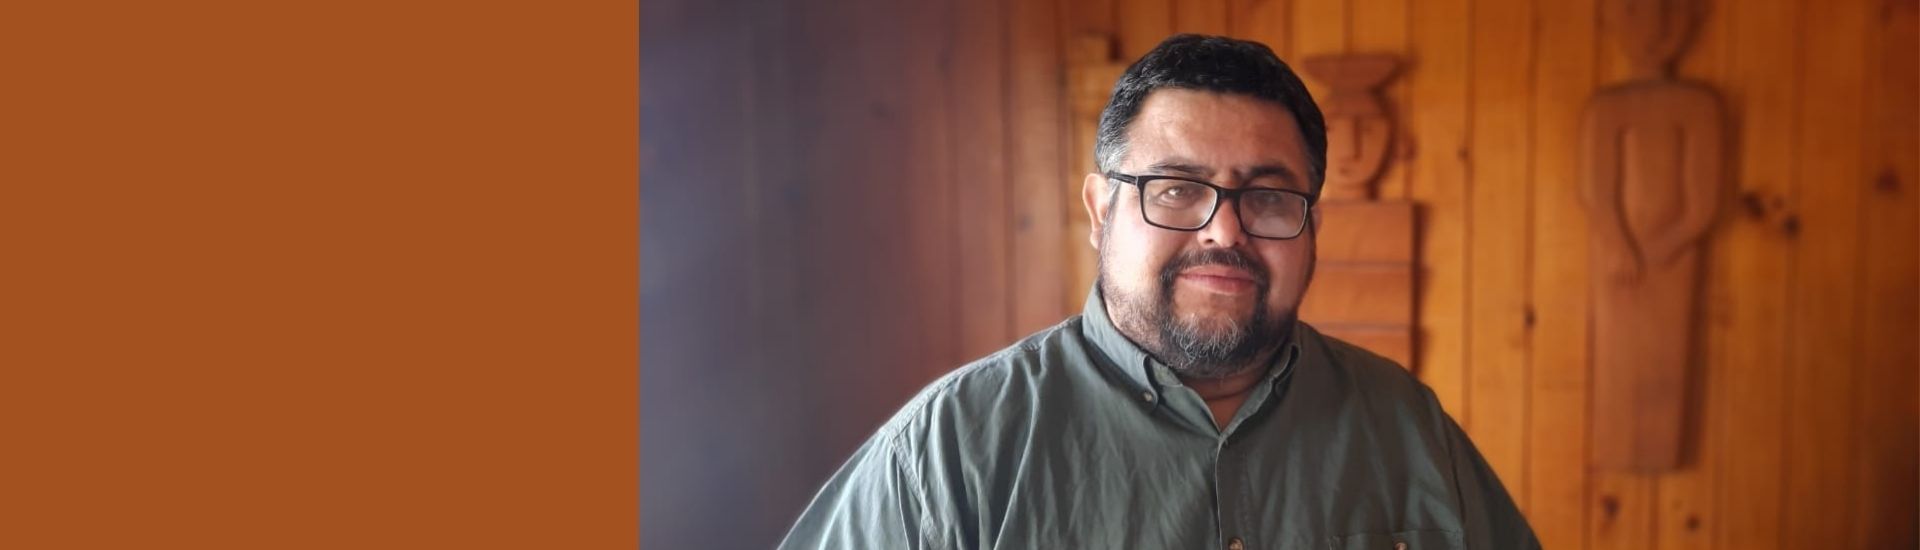 Profesor de Música, Sergio, que preserva la cultura Mapuche en sus clases